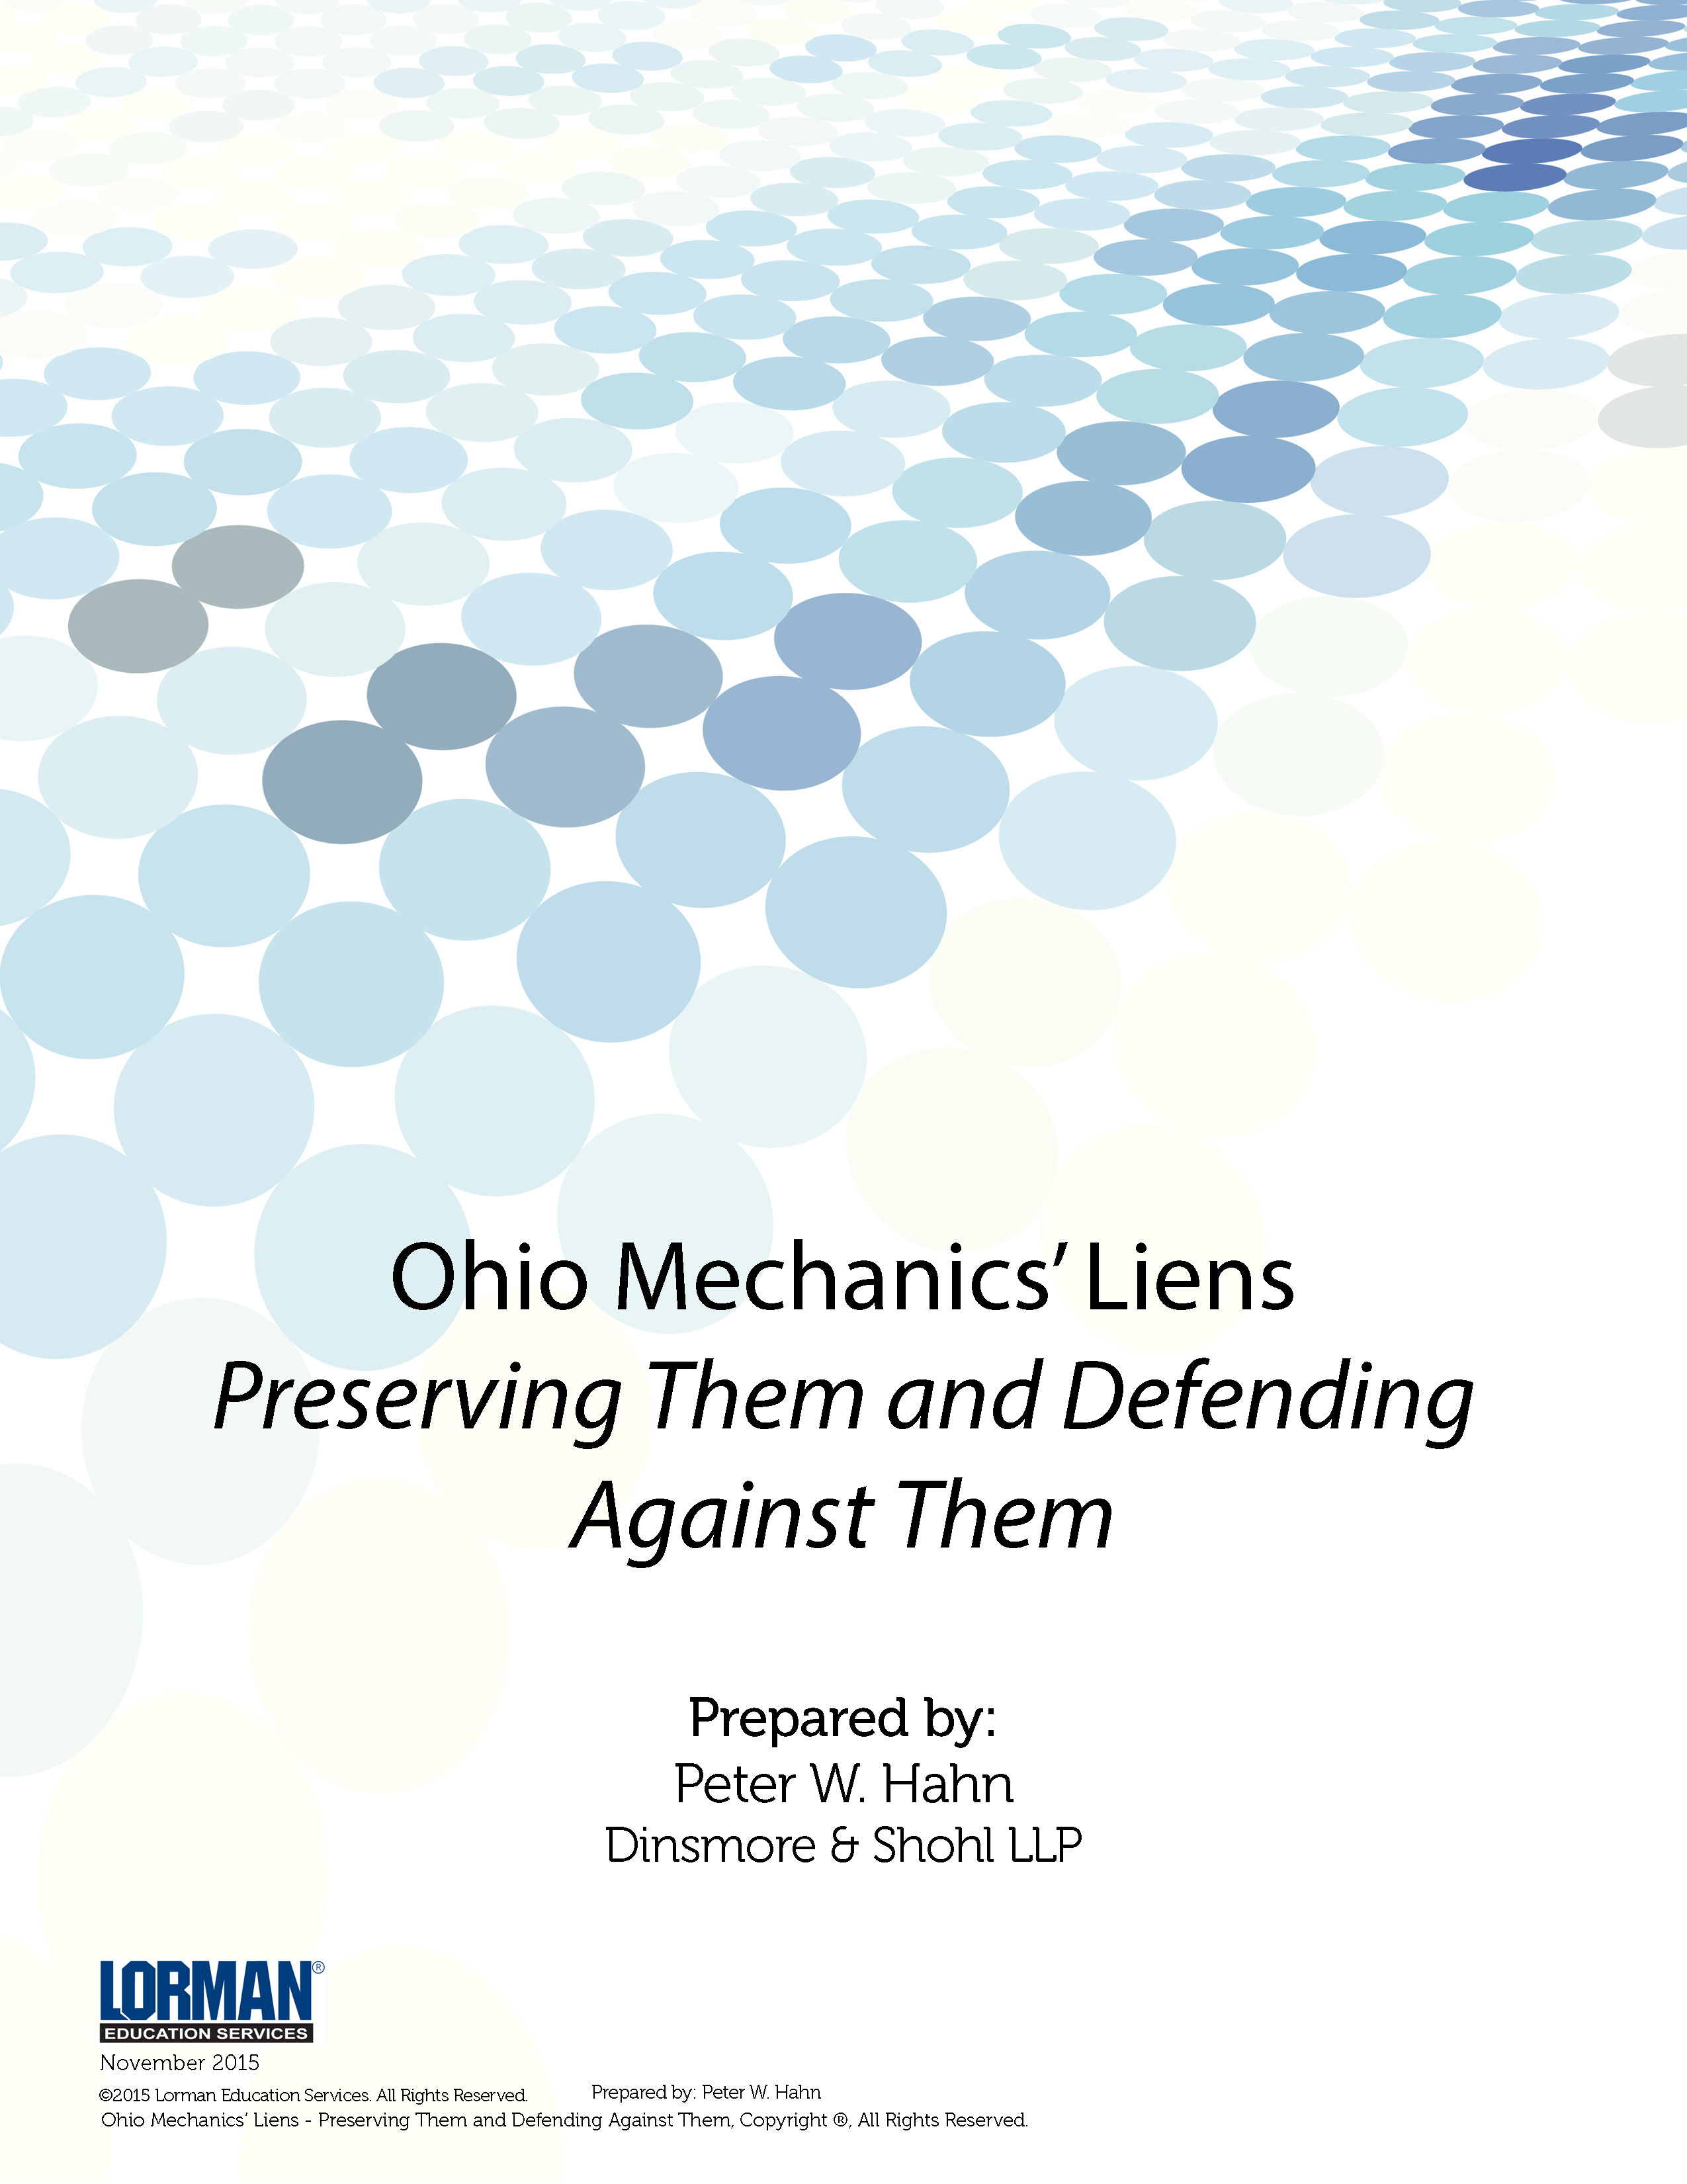 Ohio Mechanics' Liens - Preserving Them and Defending Against Them